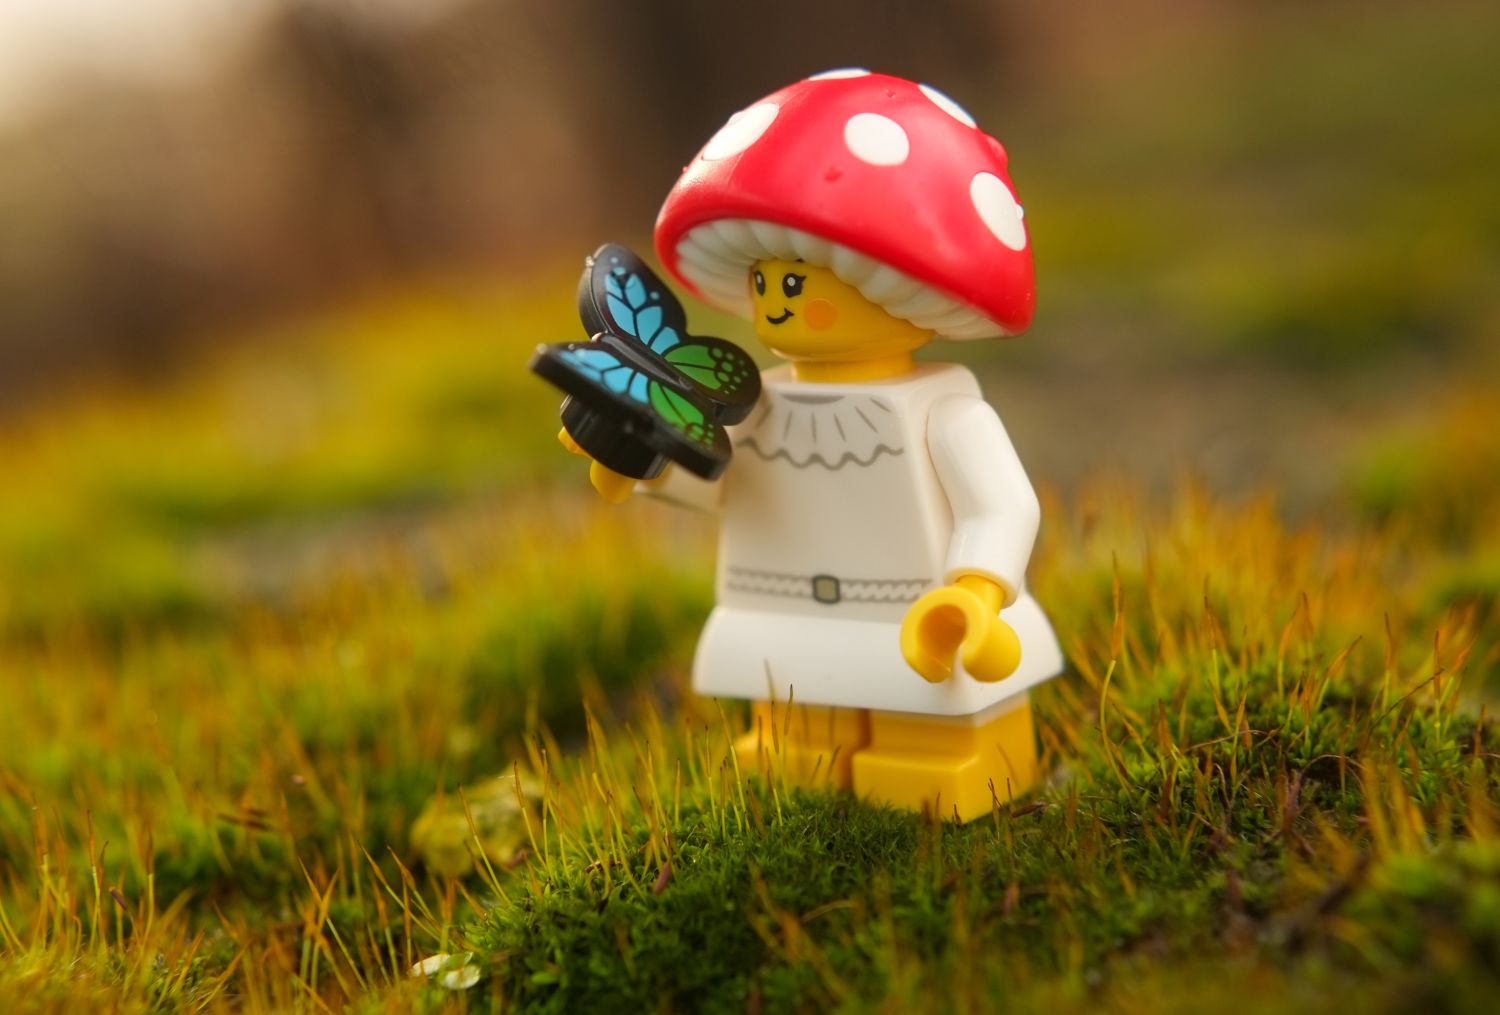 A LEGO mushroom sprite minifigure holding a LEGO butterfly.